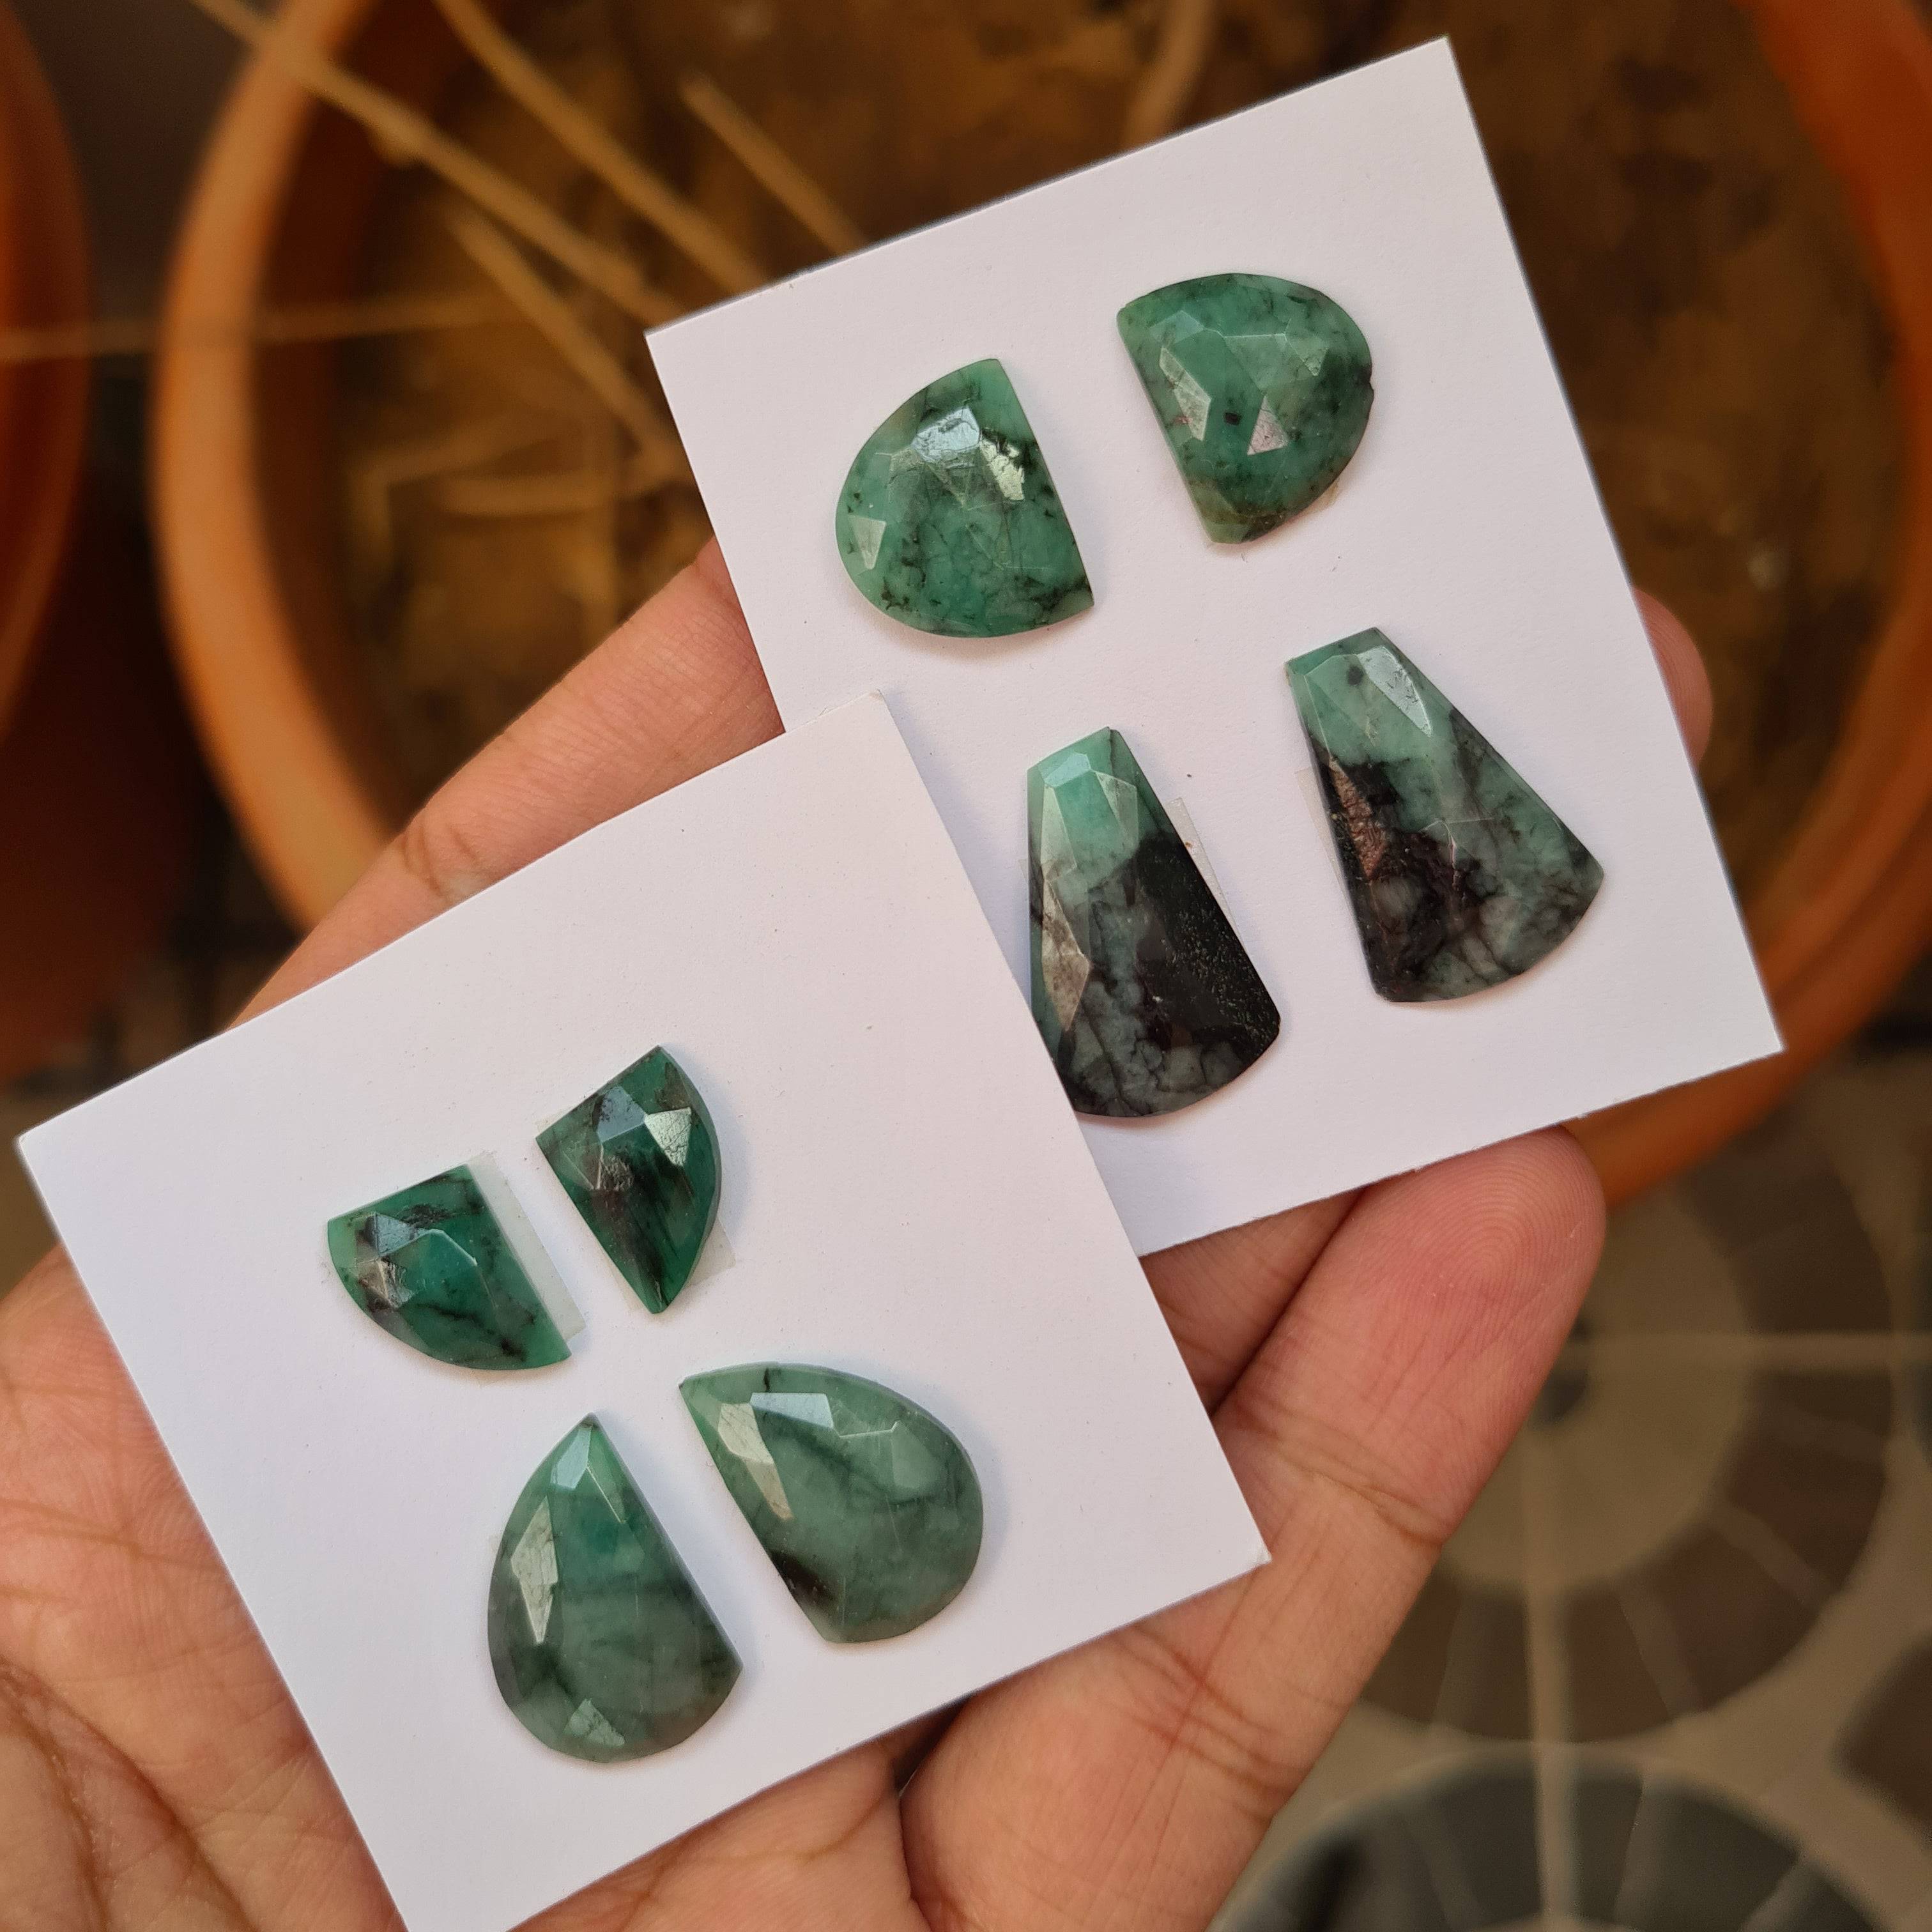 2 Lots 8 pcs Pcs Mozambique Natural Emerald Stone Pairs with Flat backs |Fancy shape13-19mm Size - The LabradoriteKing